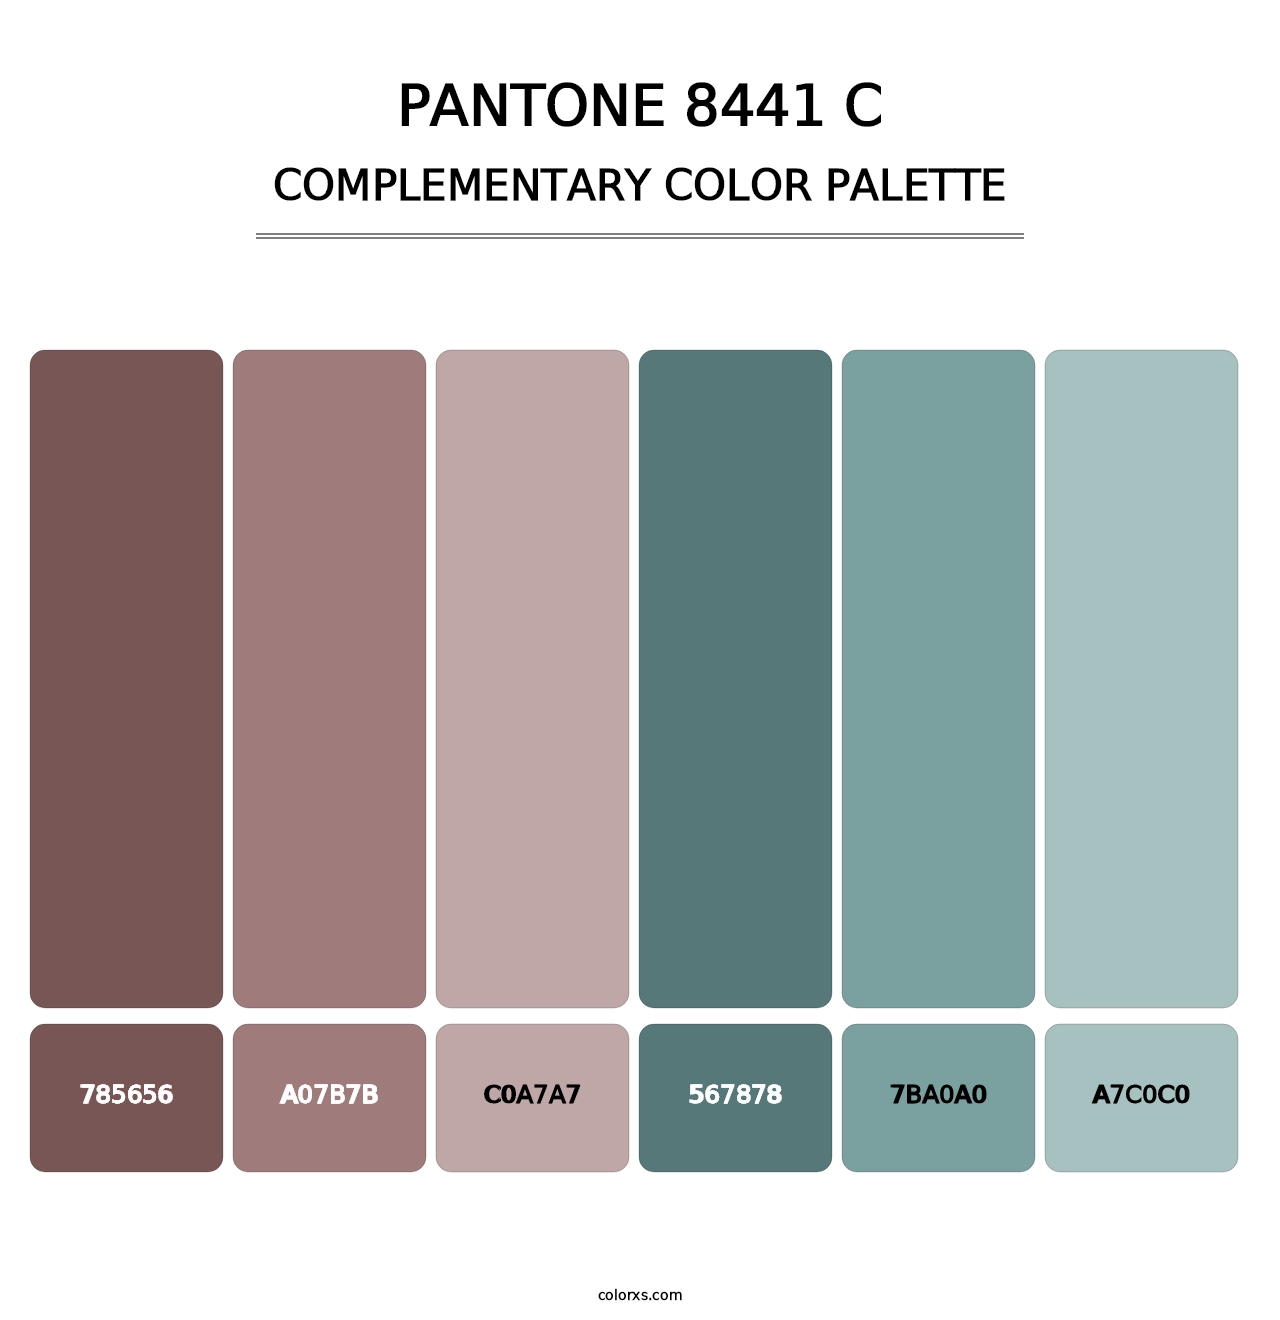 PANTONE 8441 C - Complementary Color Palette